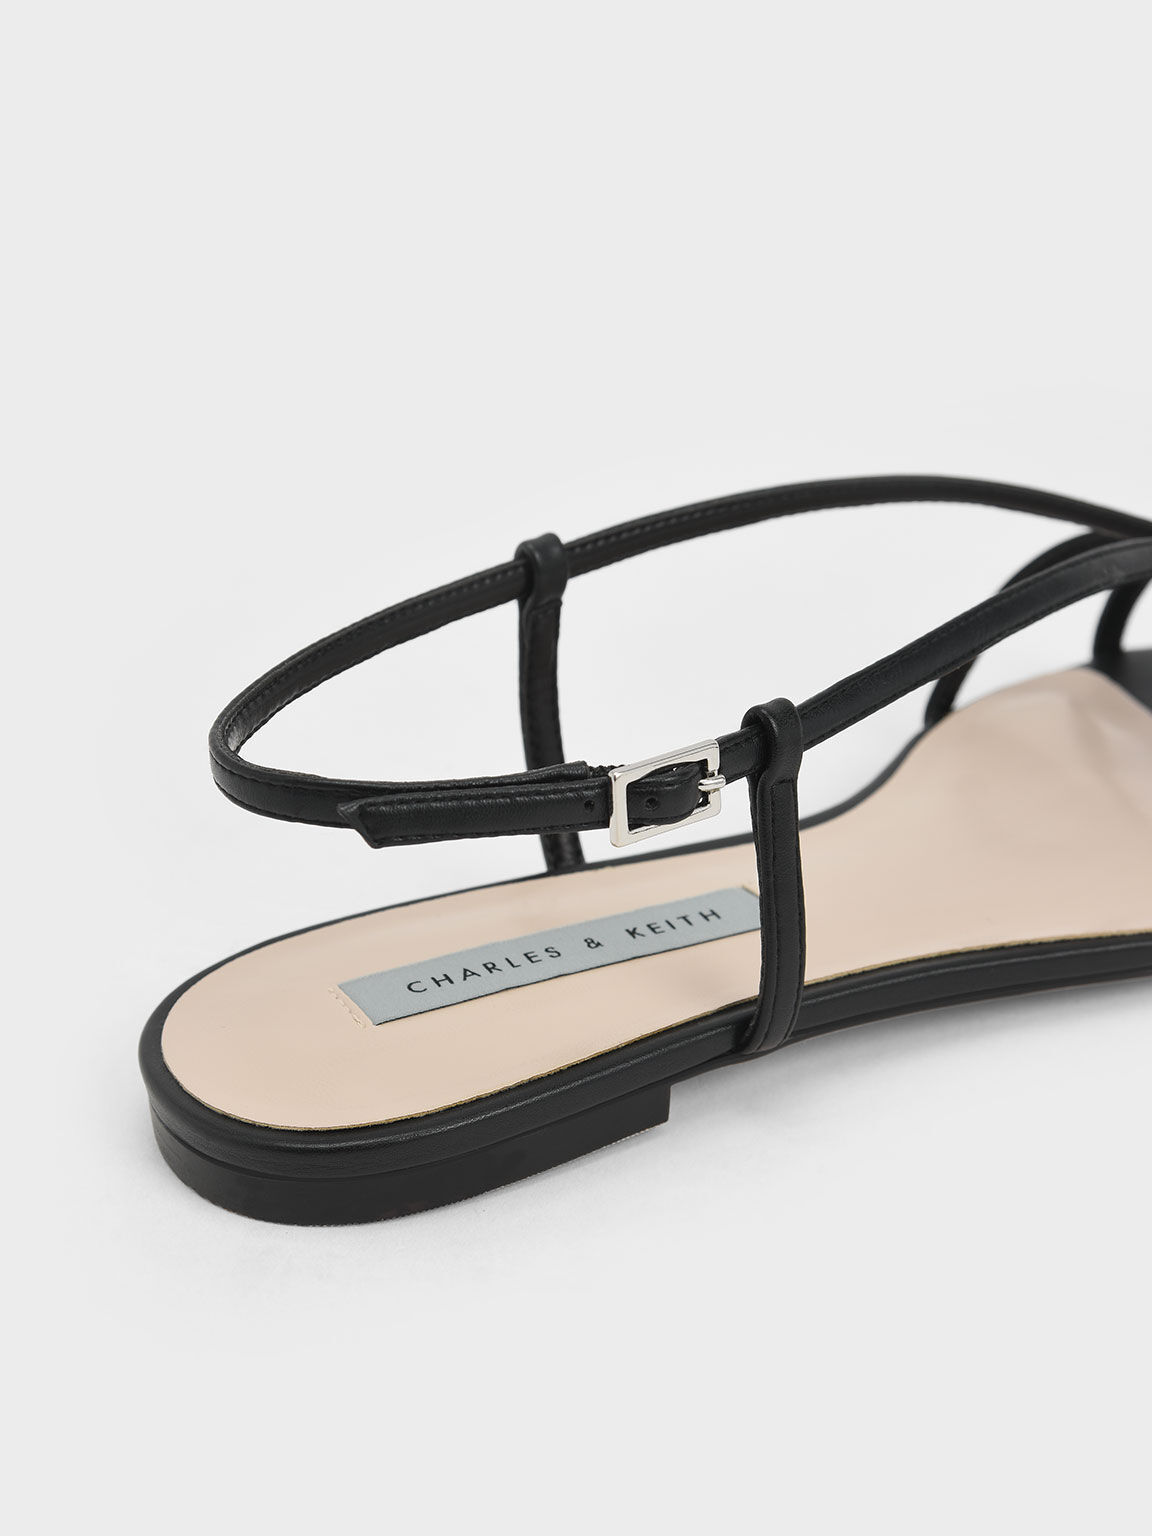 Strappy Knotted Slingback Flat Sandals, Black, hi-res